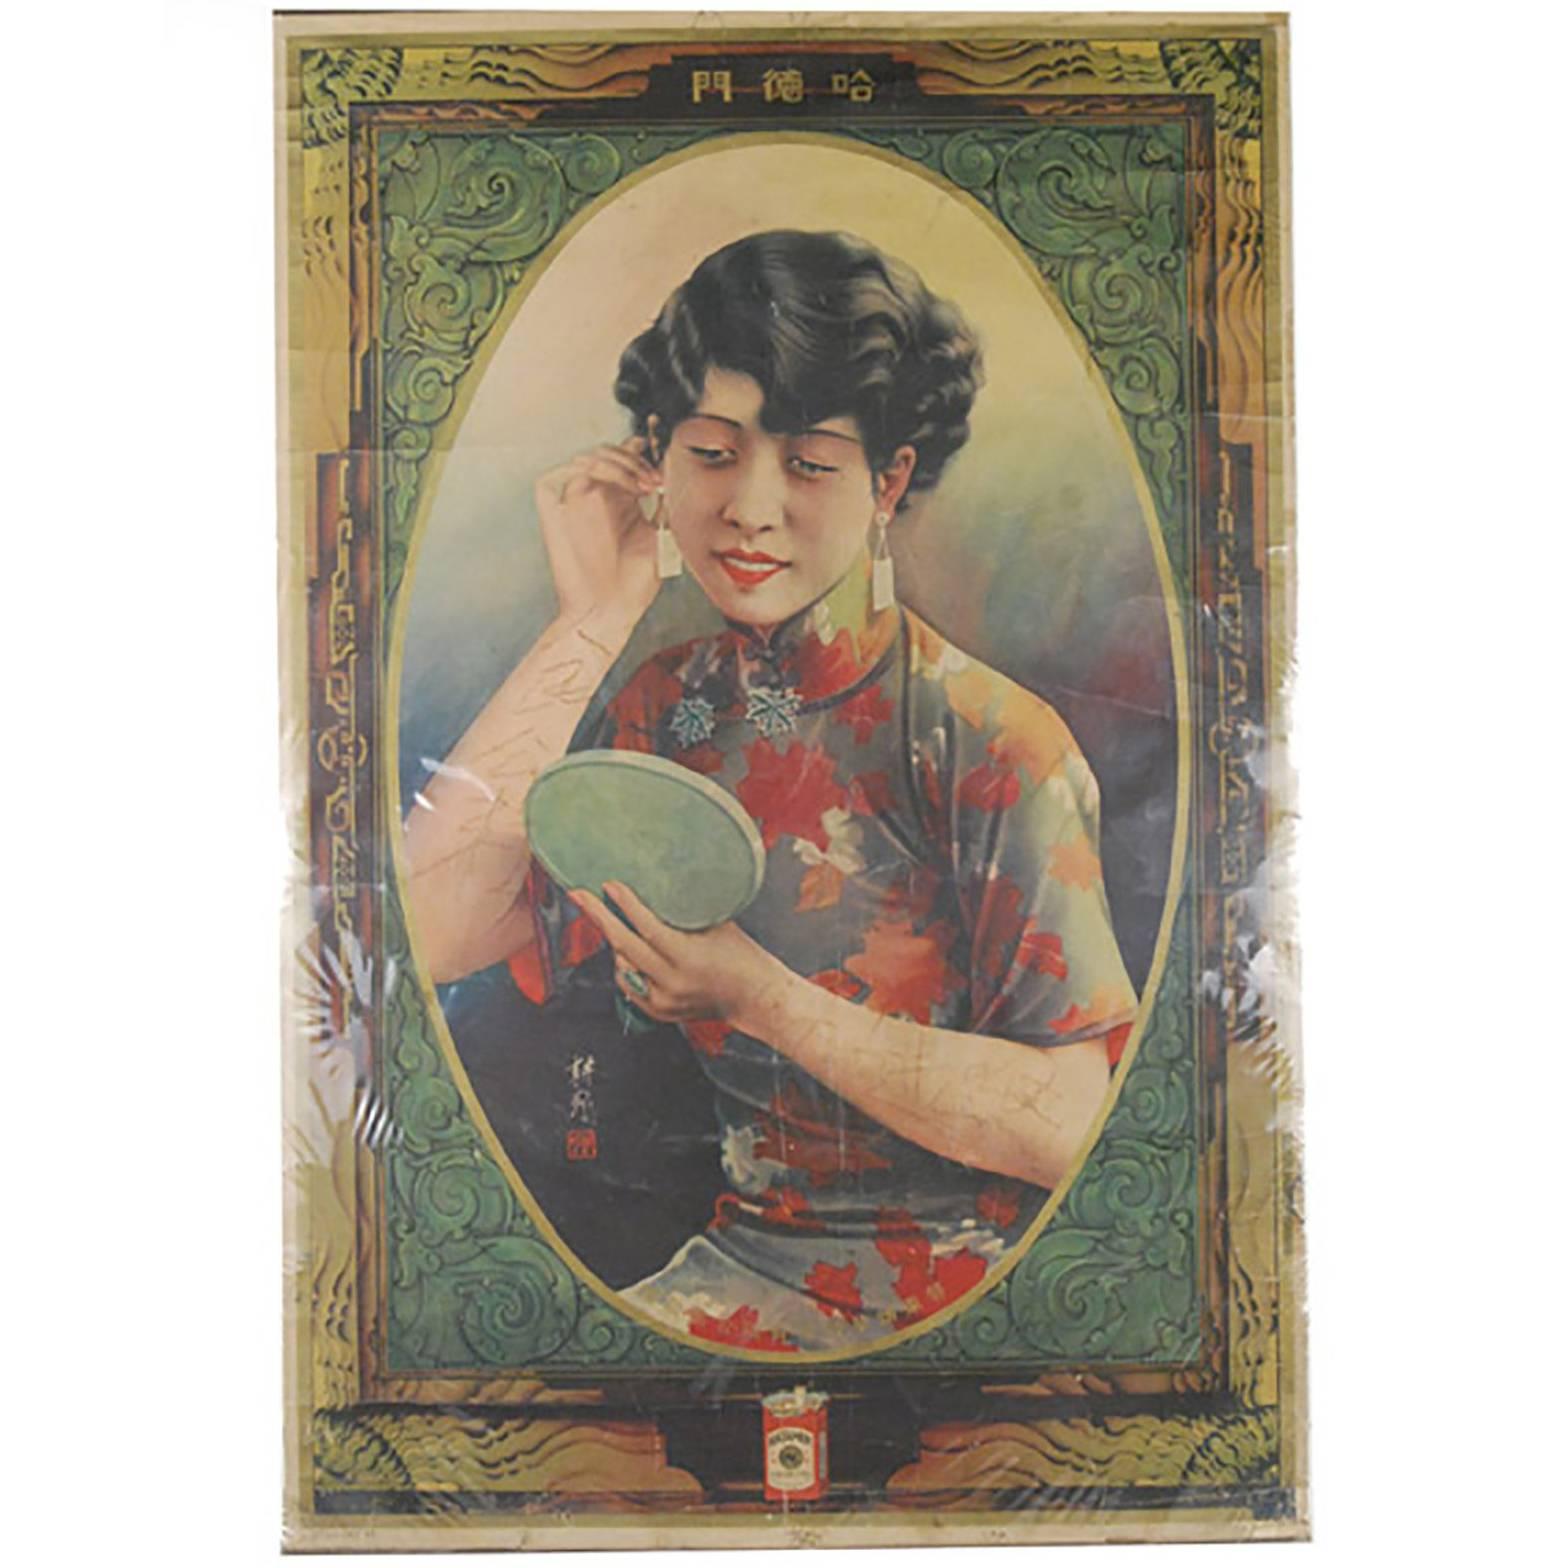 Original Chinese Hataman Brand Cigarette Advertisement Poster